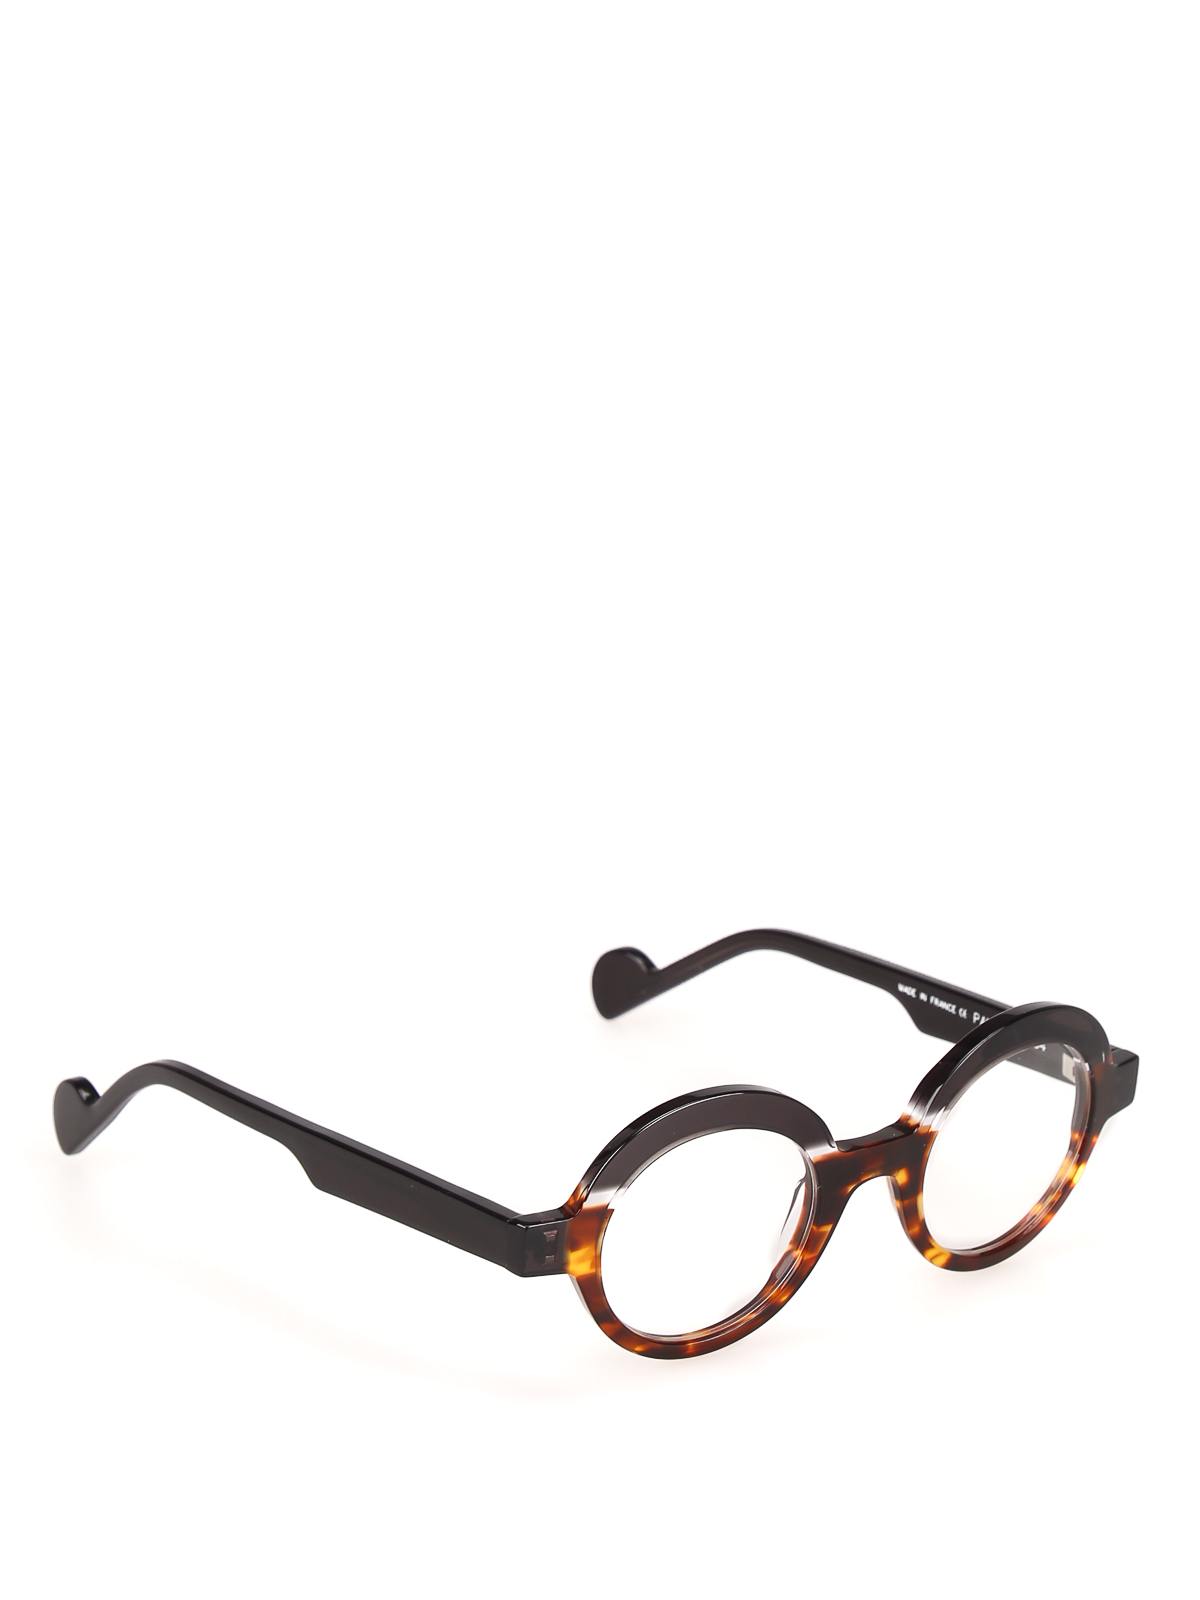 Anne&Valentin - Palette round eyeglasses - Glasses - PALETTE8A34